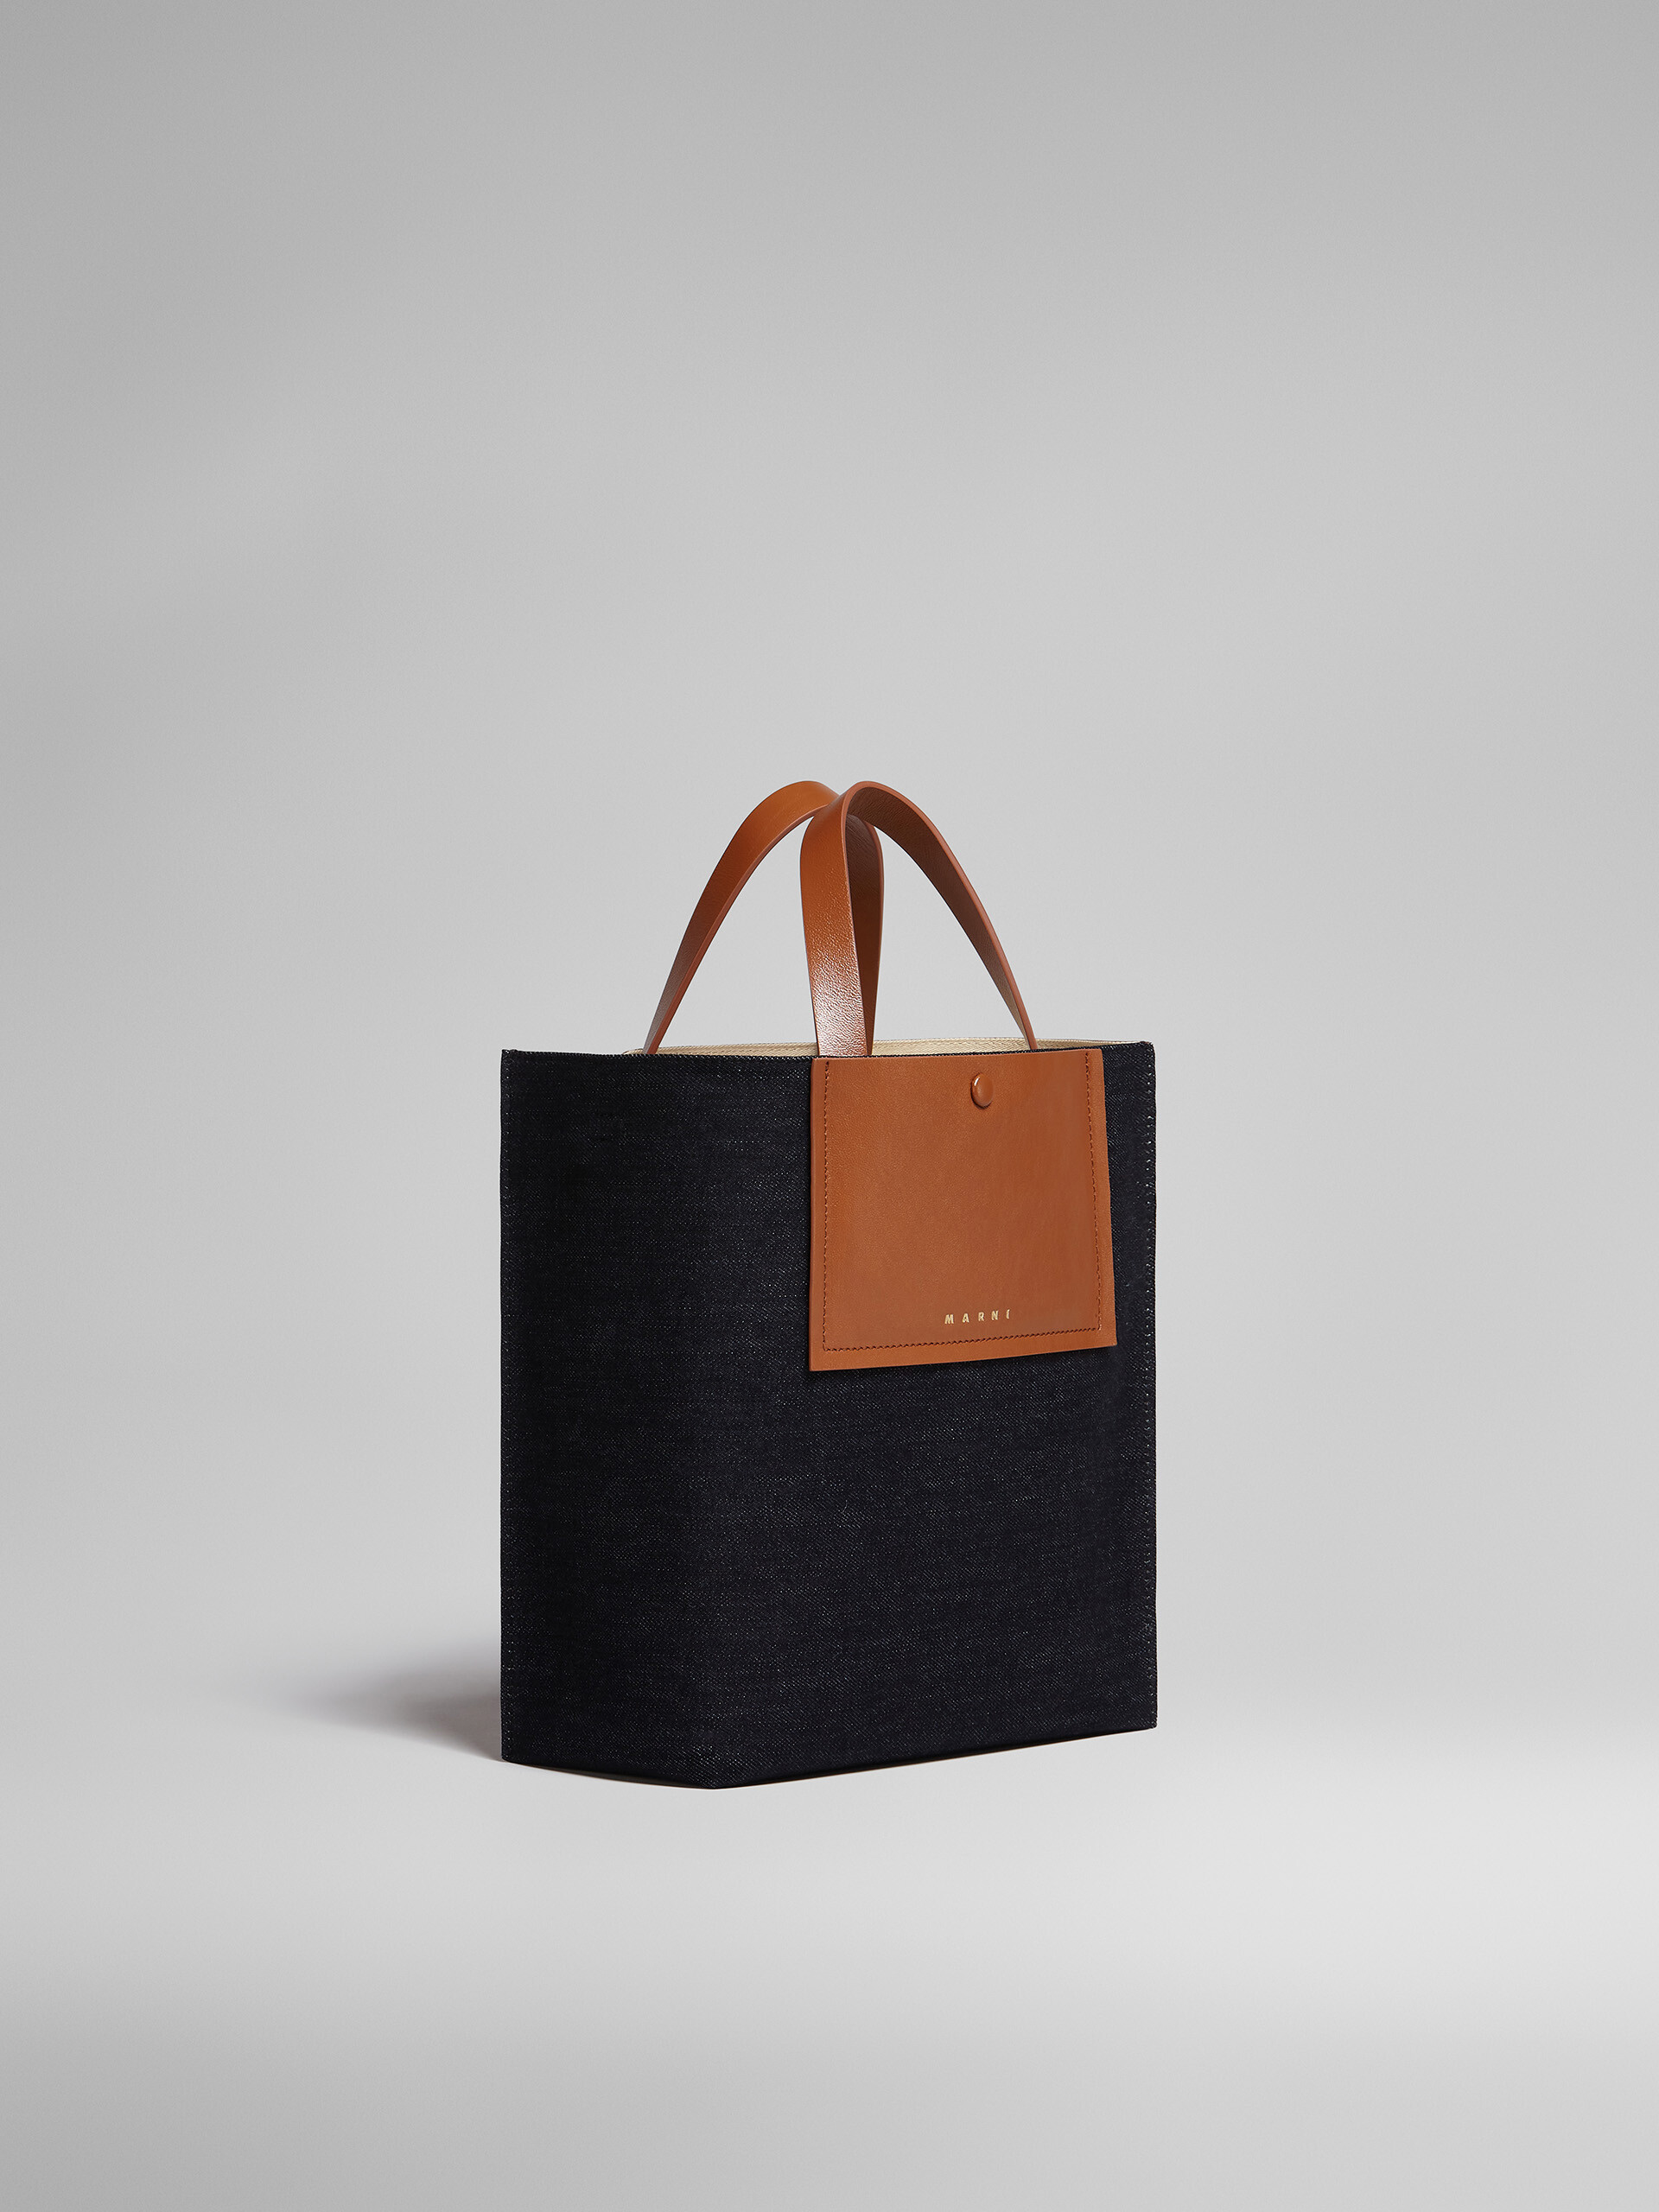 MUSEO SOFT bag grande in denim e pelle - Borse shopping - Image 6